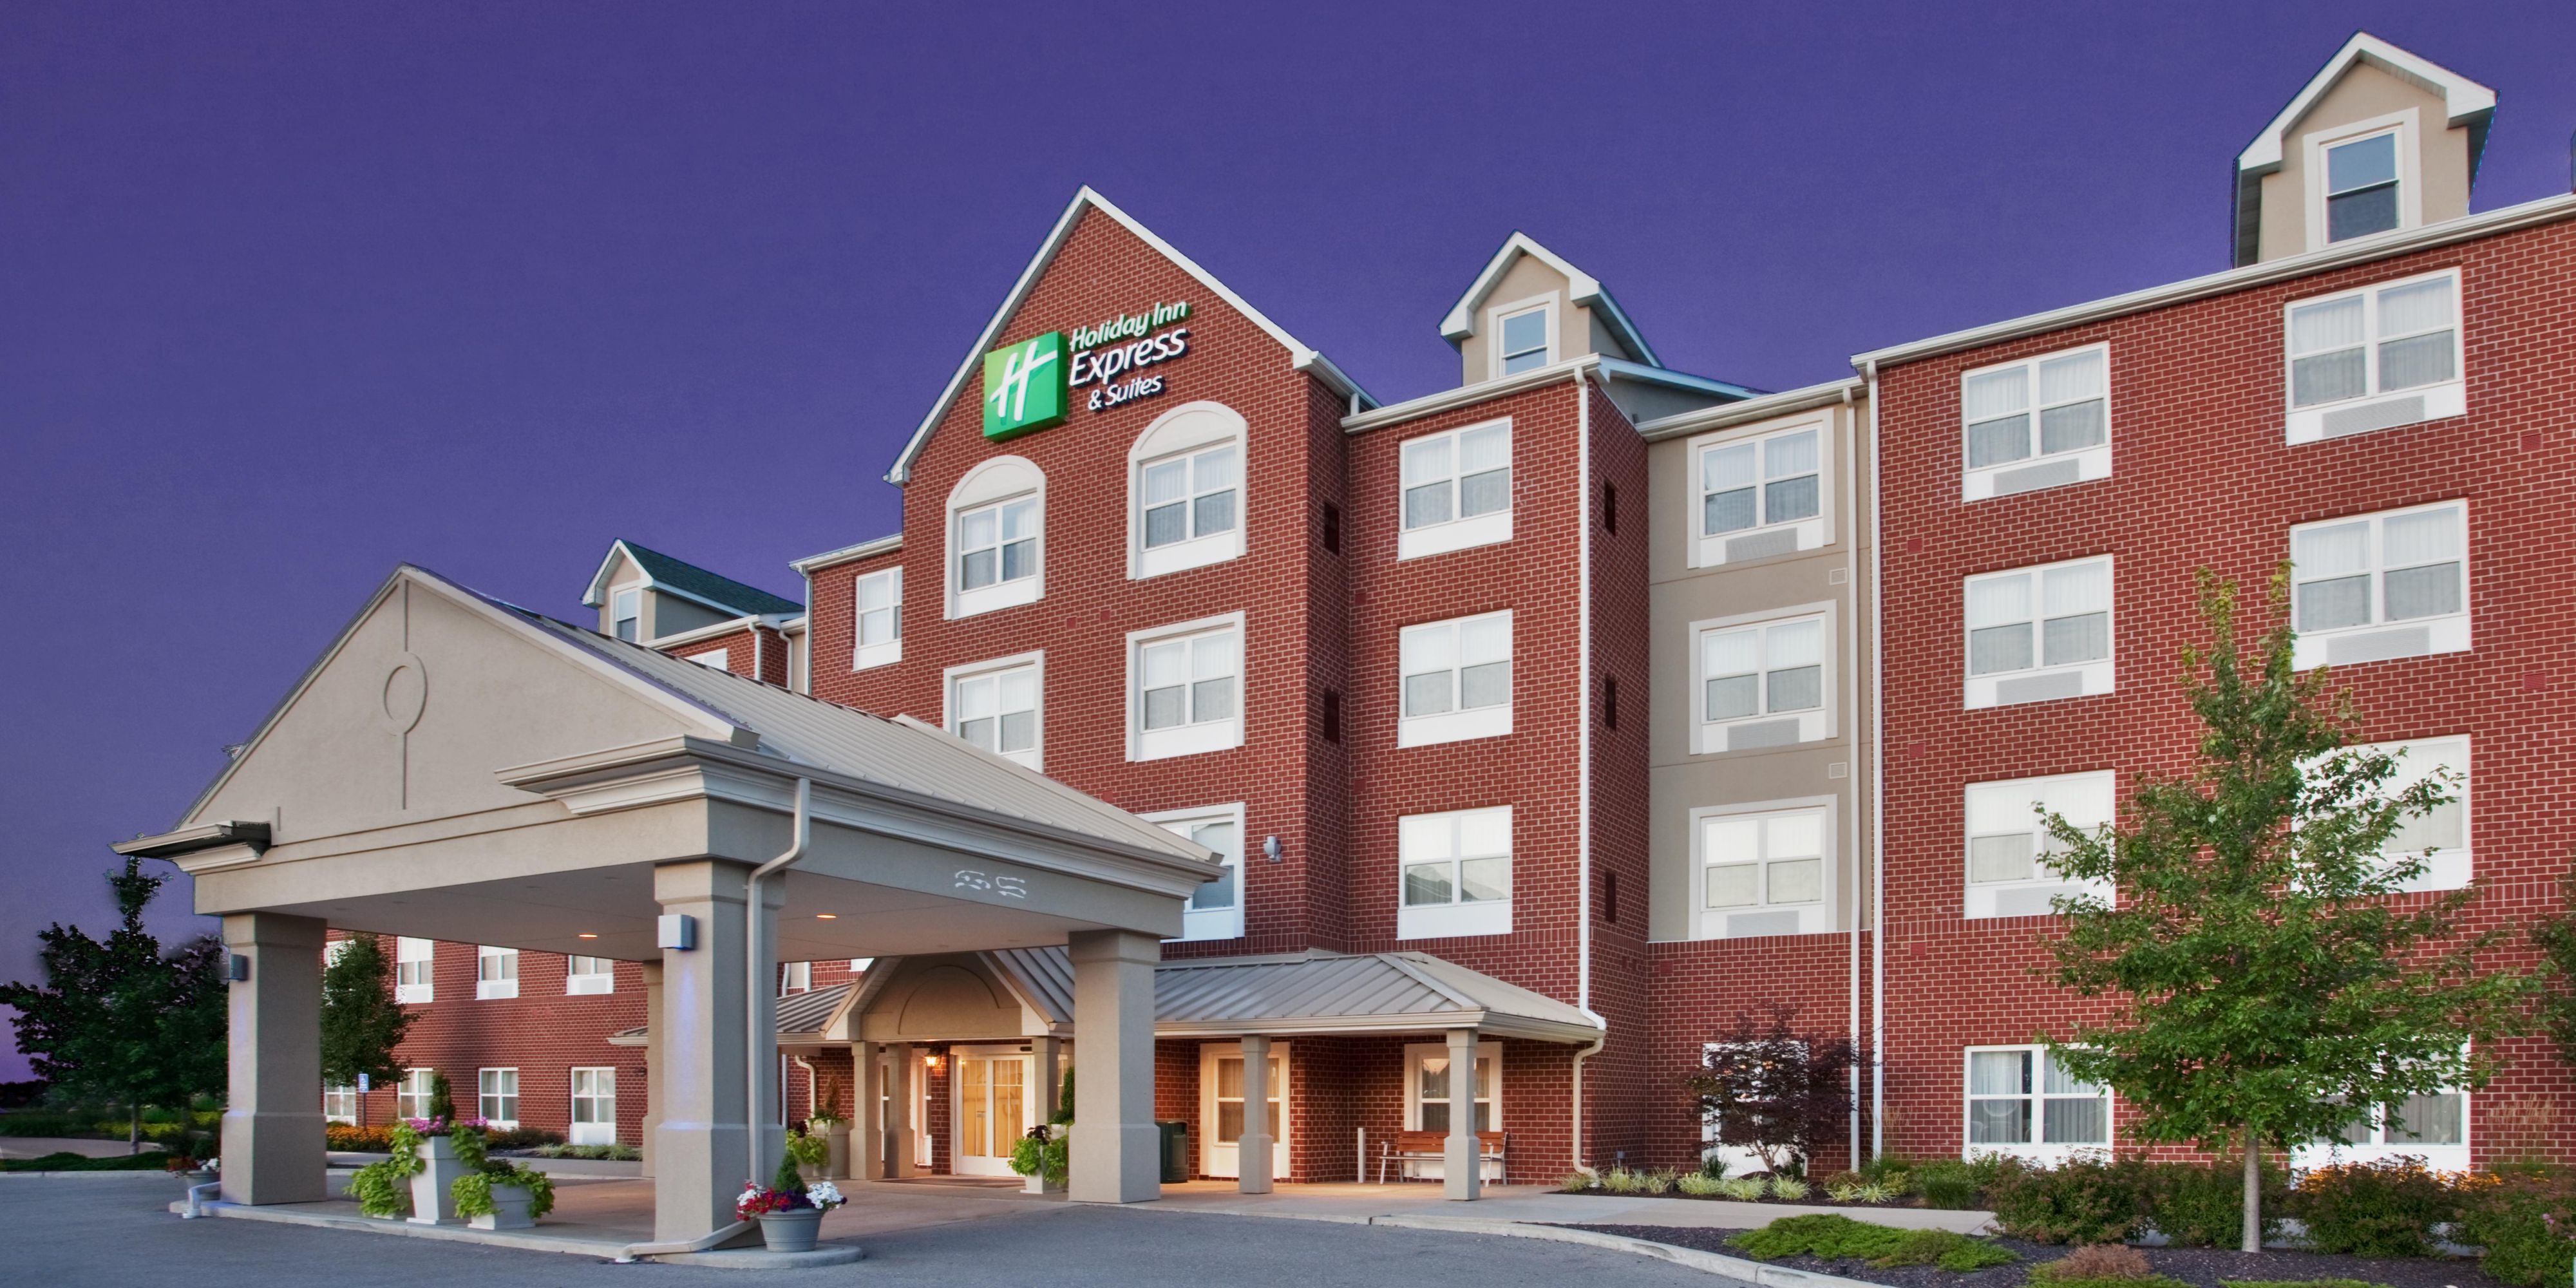 Photo of Holiday Inn Express & Suites St. Louis West-O'Fallon, O'Fallon, MO